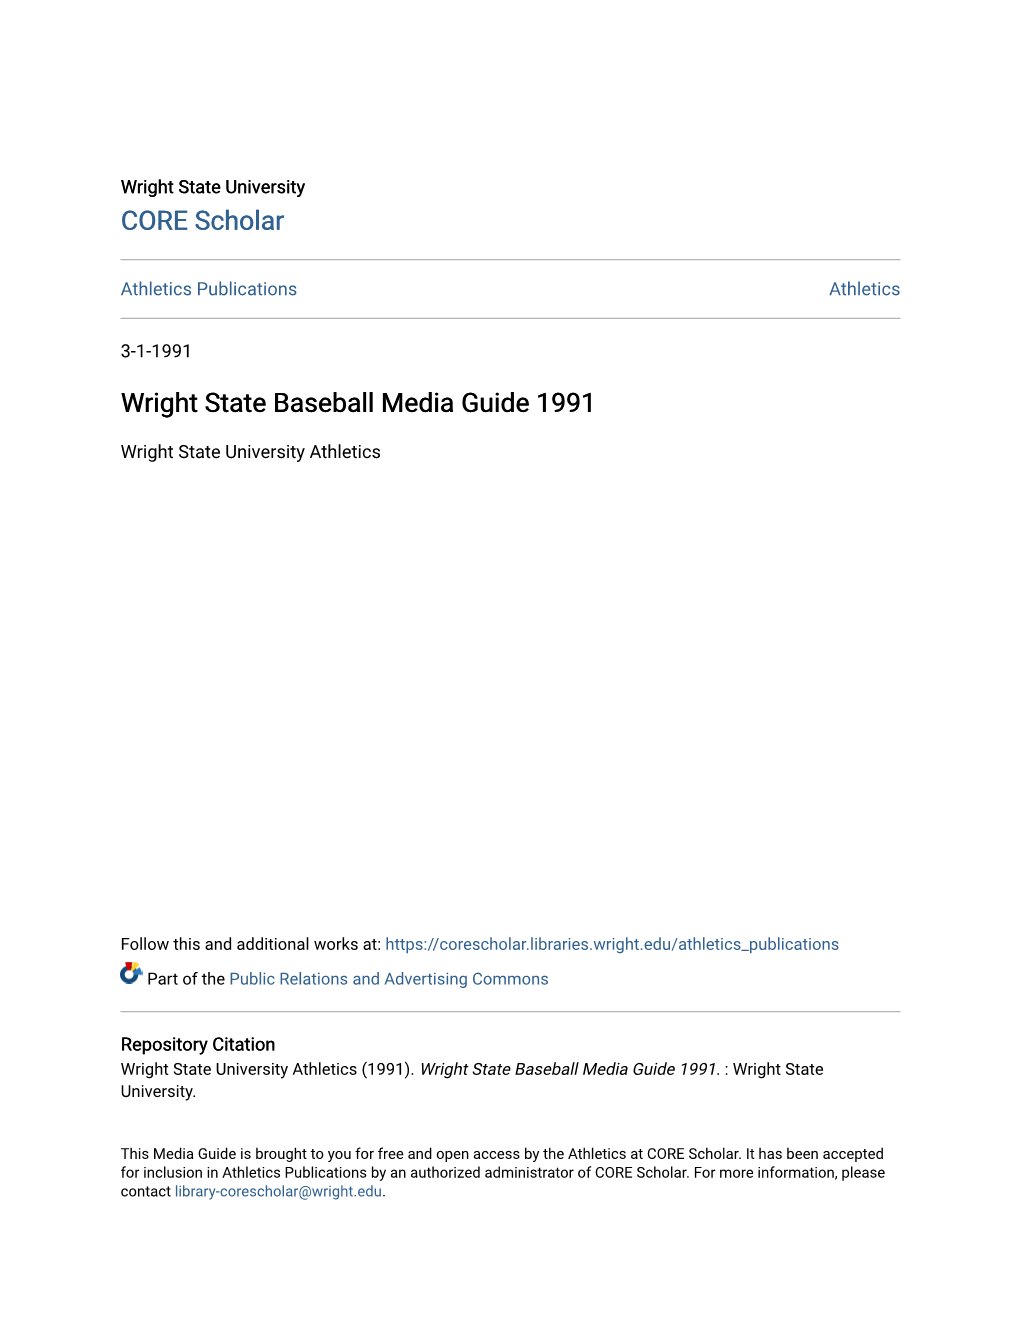 Wright State Baseball Media Guide 1991